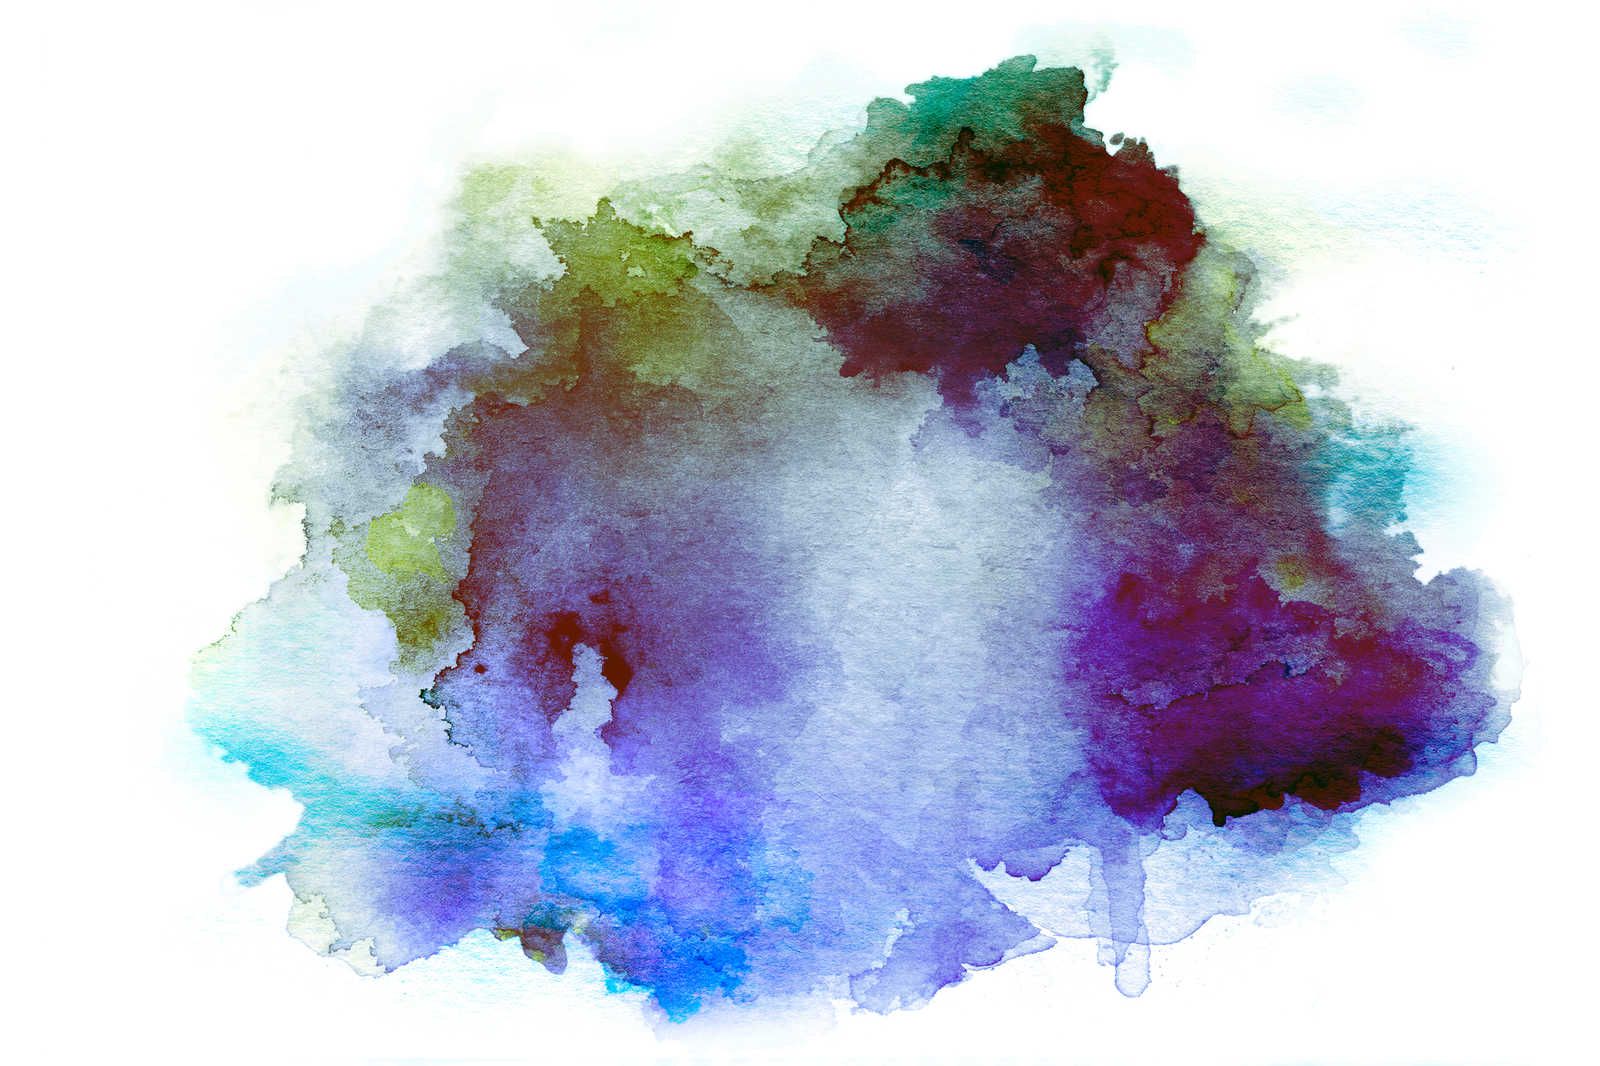             Aquarell Leinwandbild Tintenfleck, Farbverlauf Grau Blau – 1,20 m x 0,80 m
        